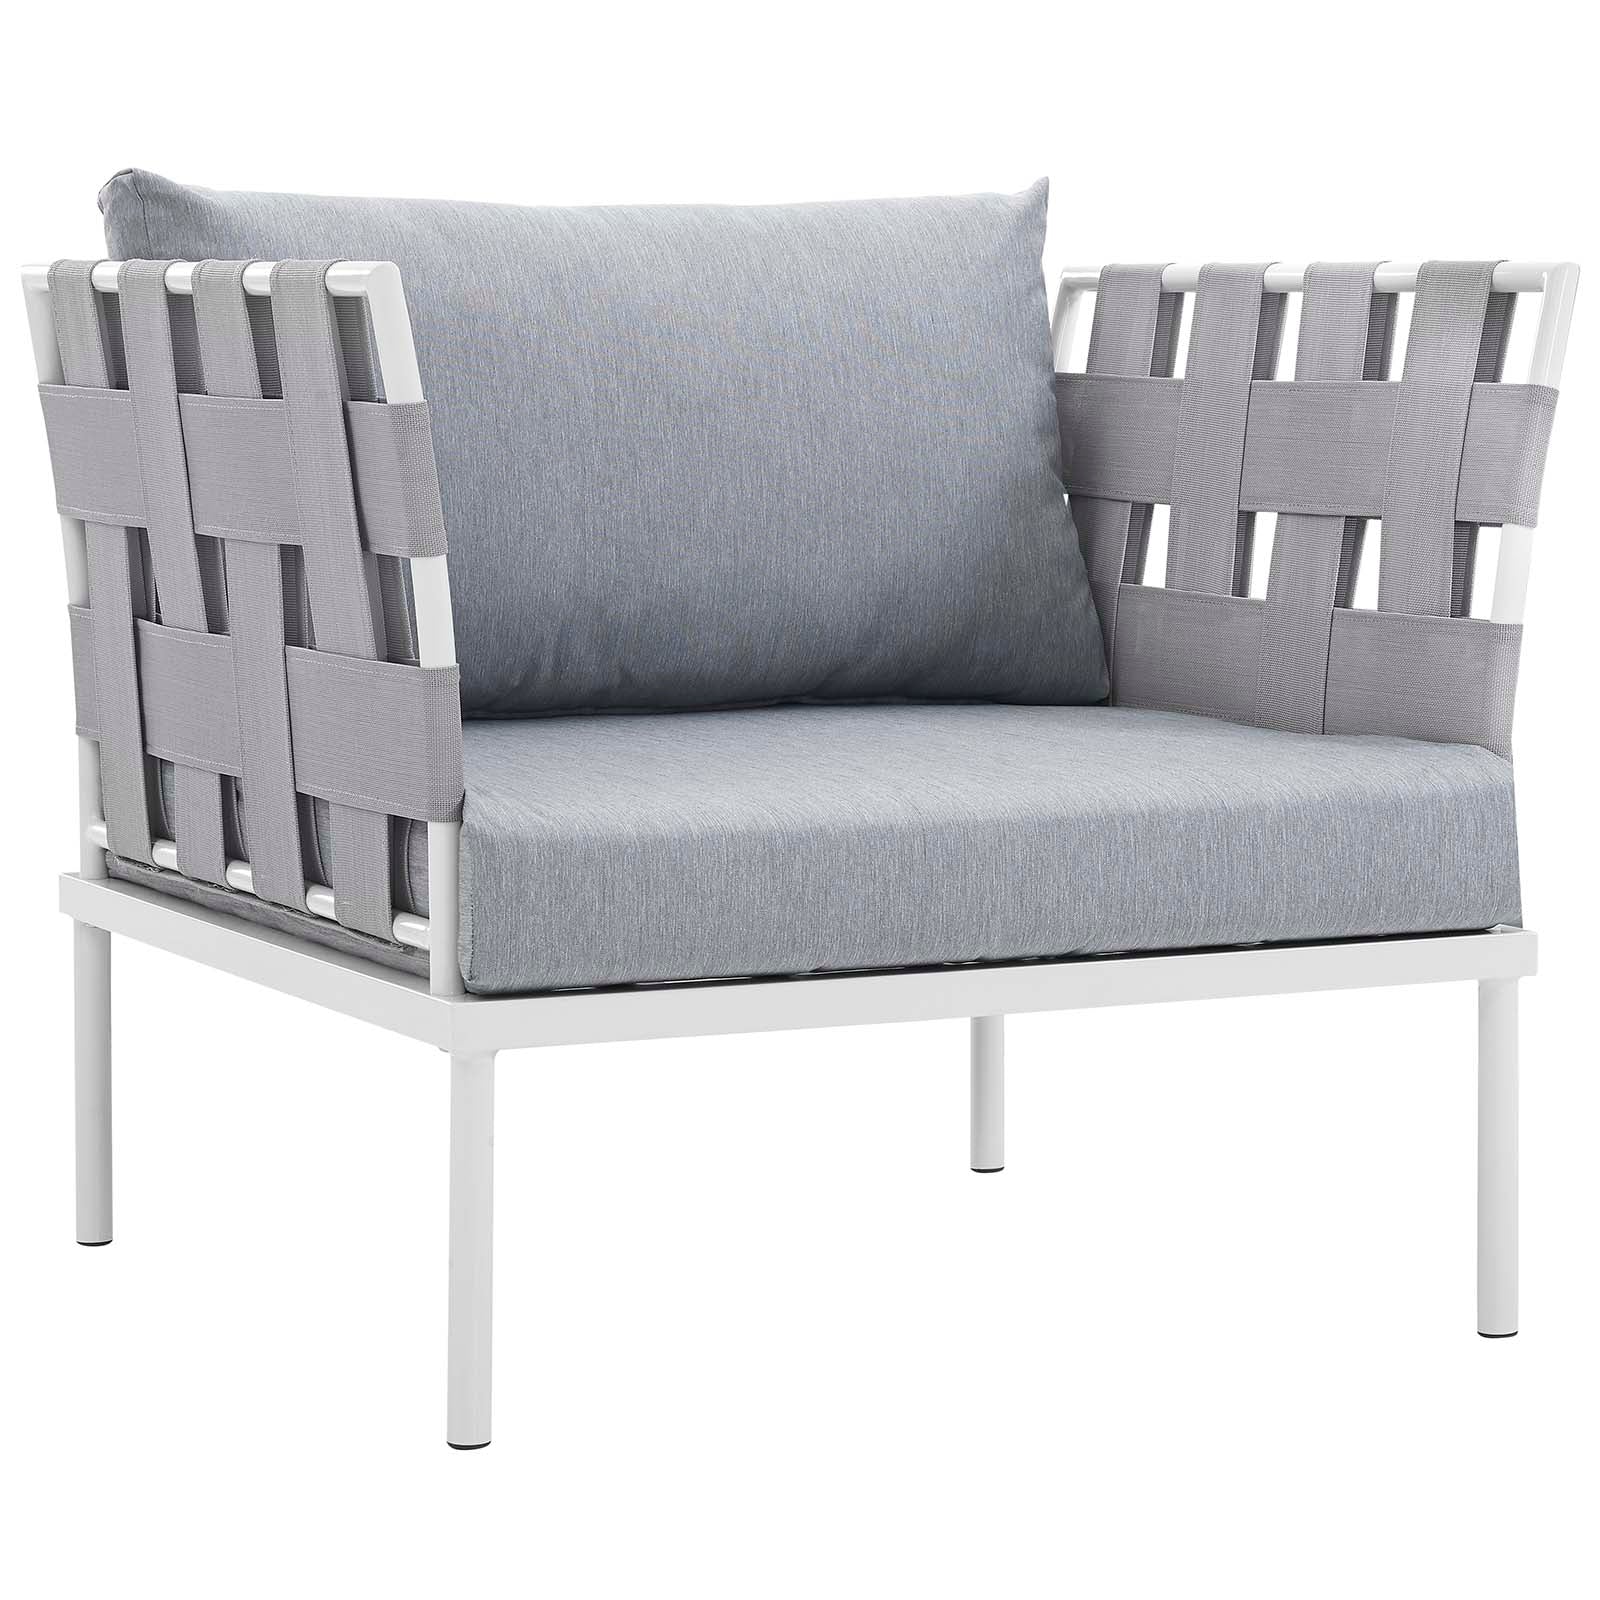 Modway Outdoor Conversation Sets - Harmony 68" 5 Piece Outdoor Patio Aluminum Sectional Sofa Set White Gray